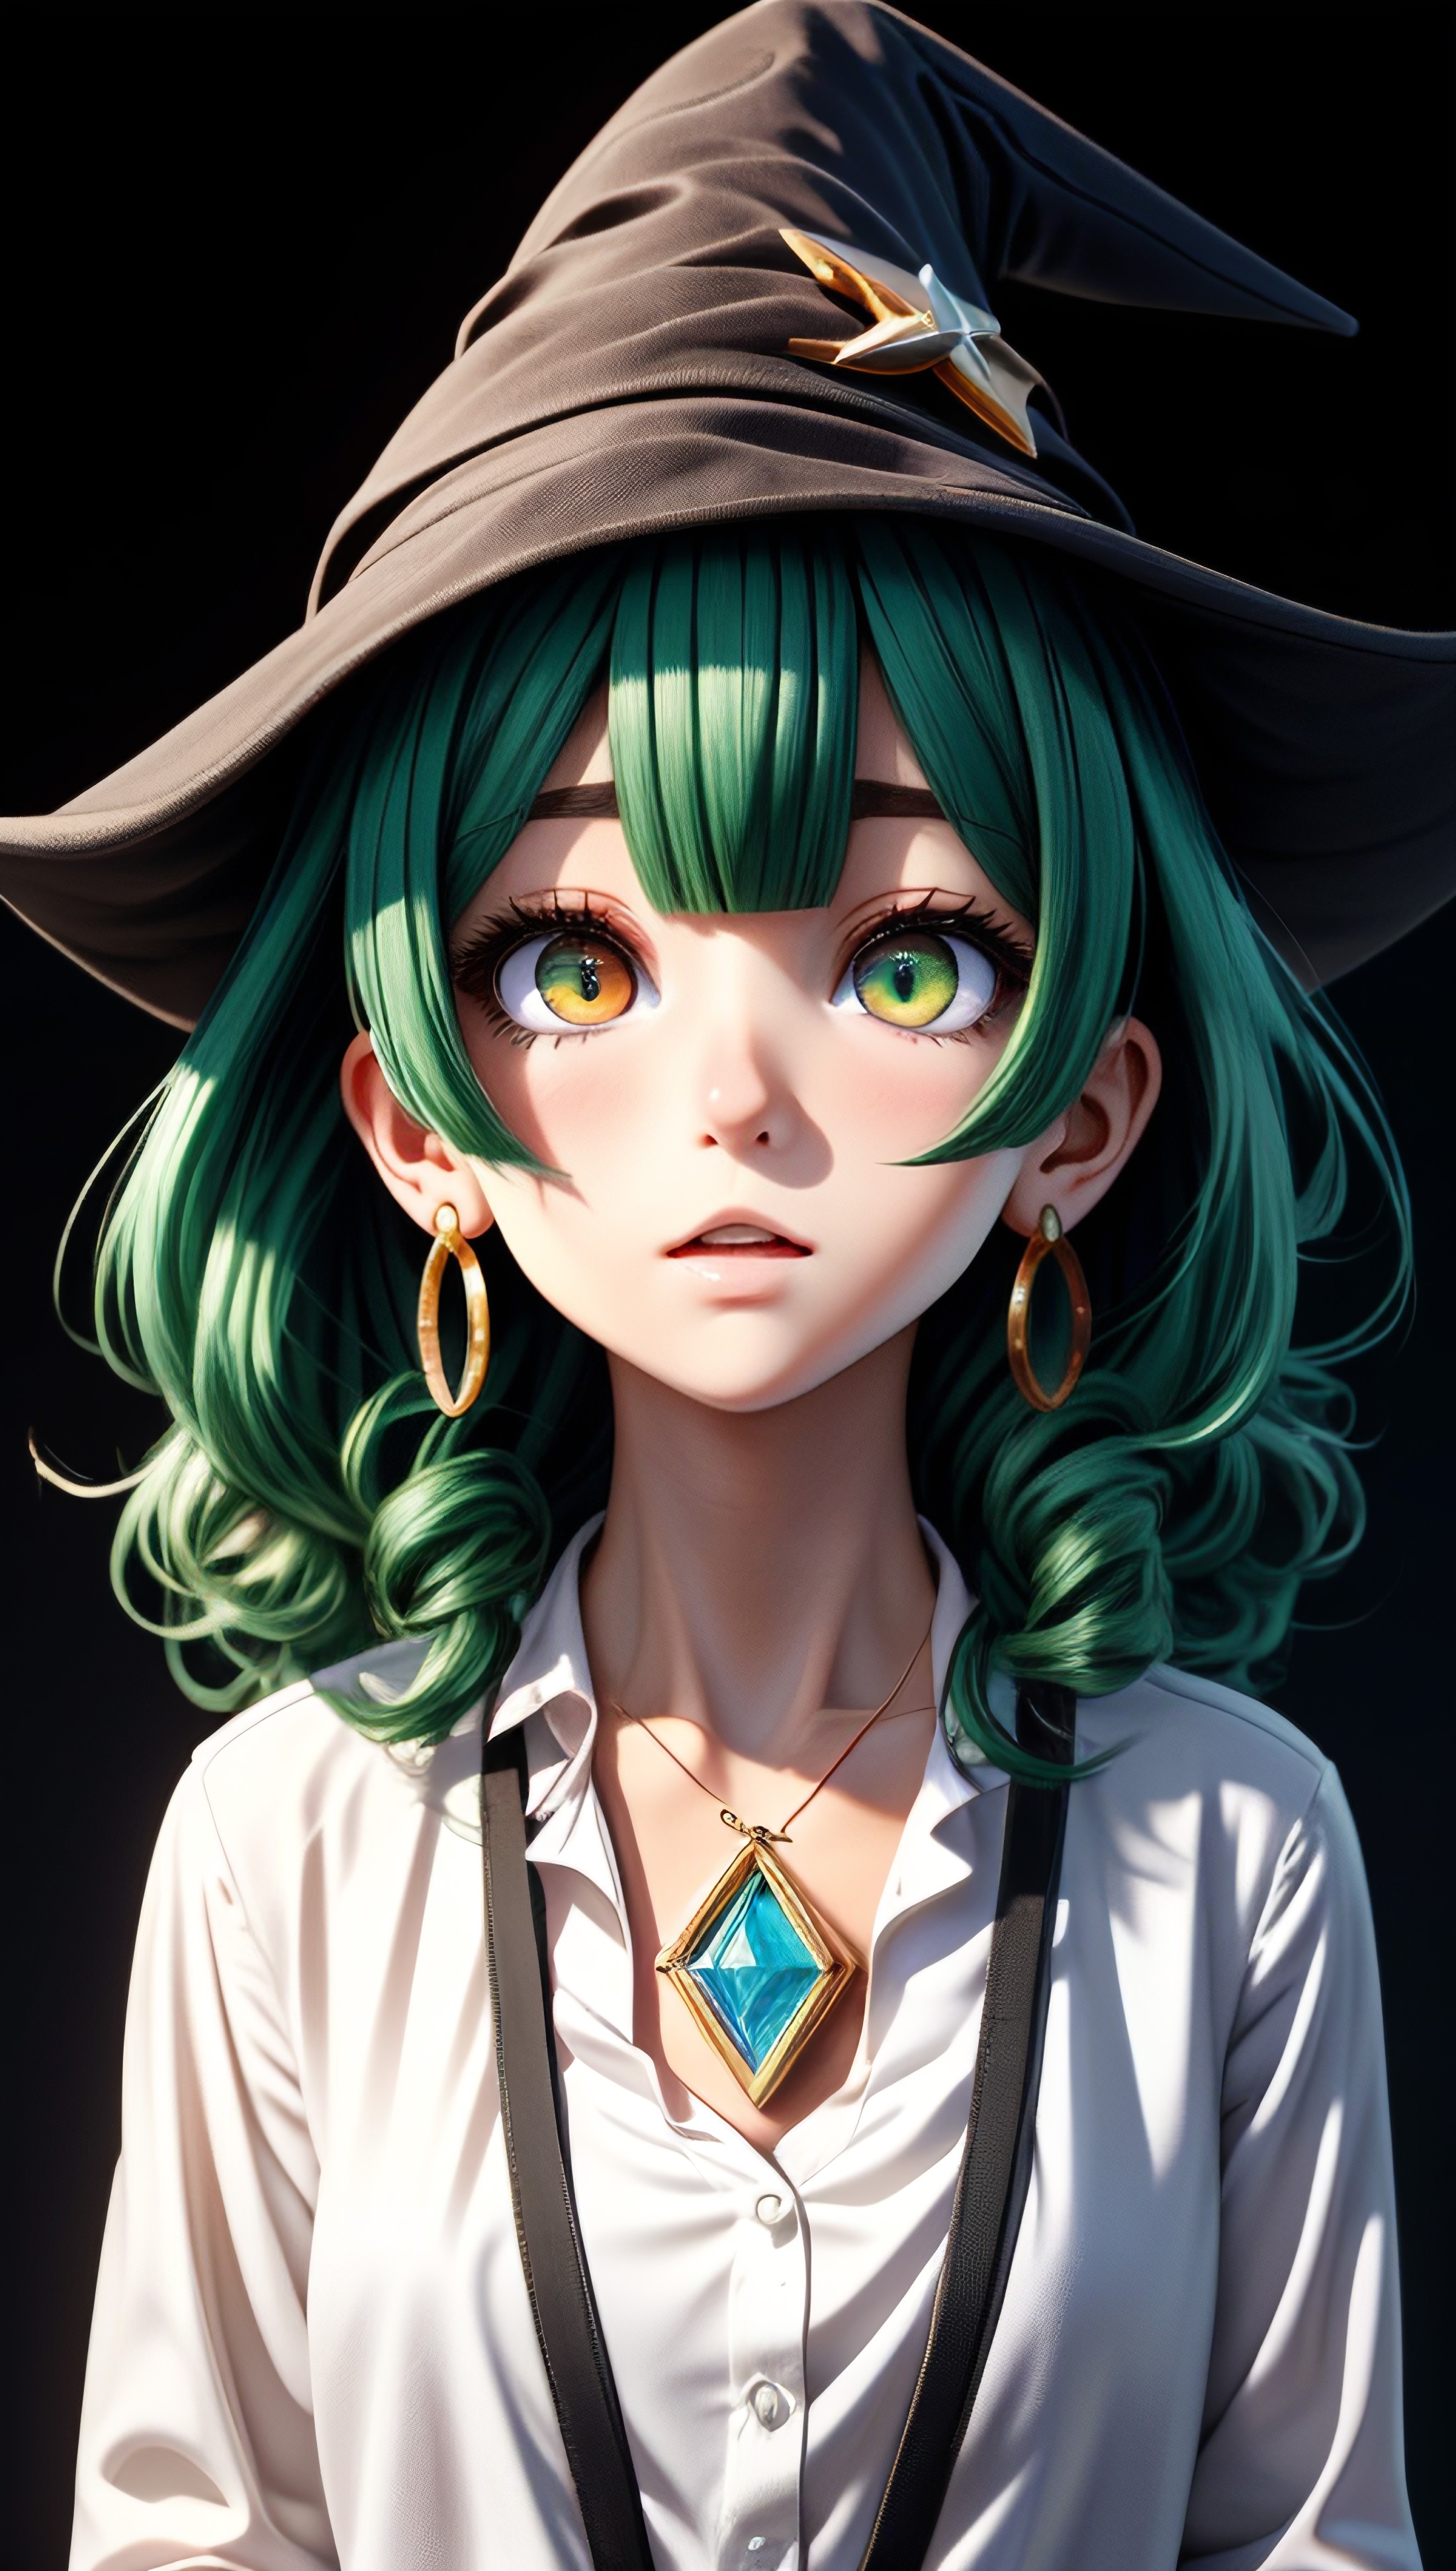 anime, ghibli style, kemono
1girl
jewelry, brooch, green hair, green eyes, looking at viewer, hat, eyeball hat ornament, e...